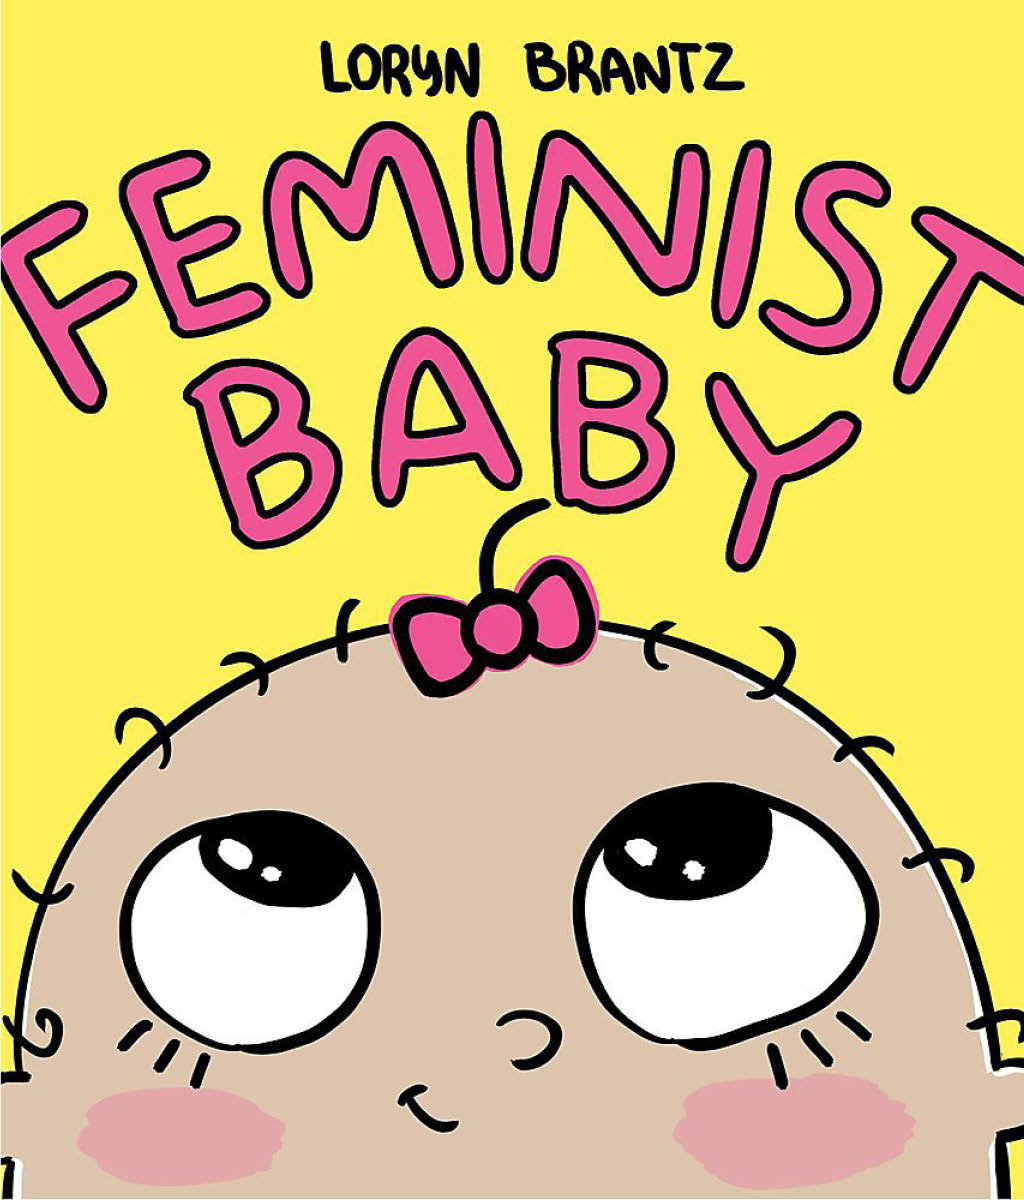 Feminist Baby by Loryn Brantz